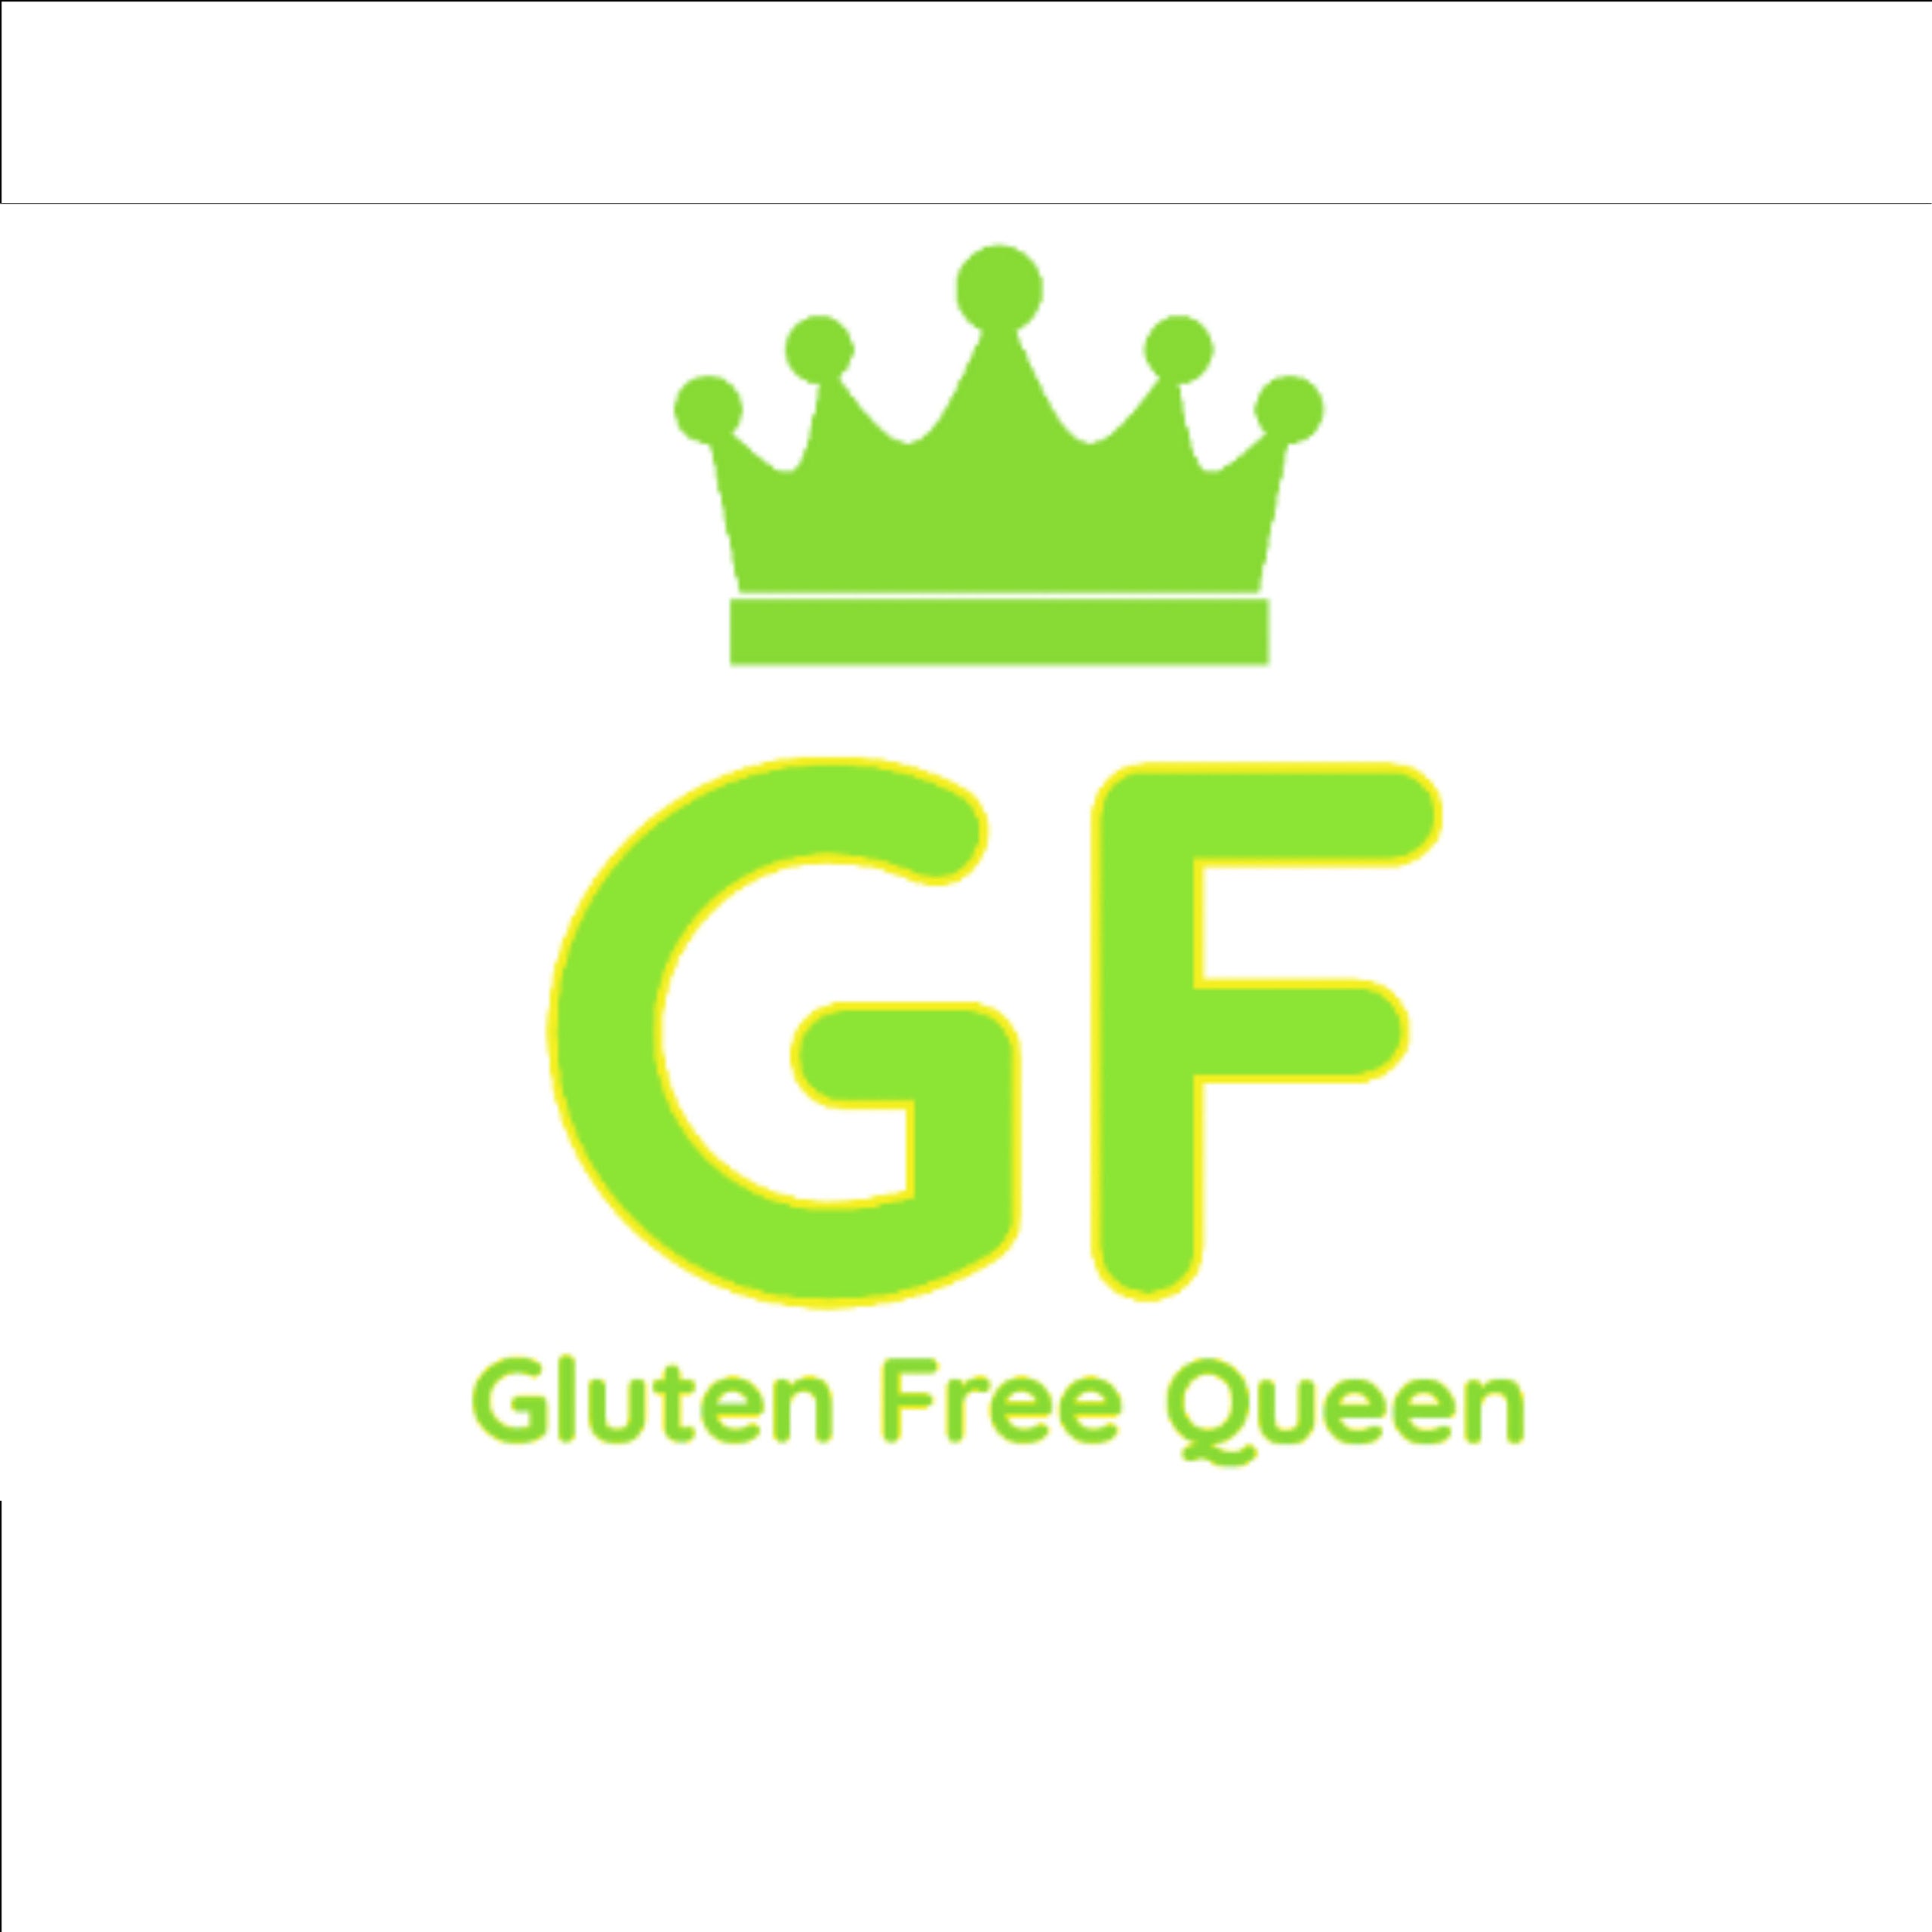 Gluten Free Queen